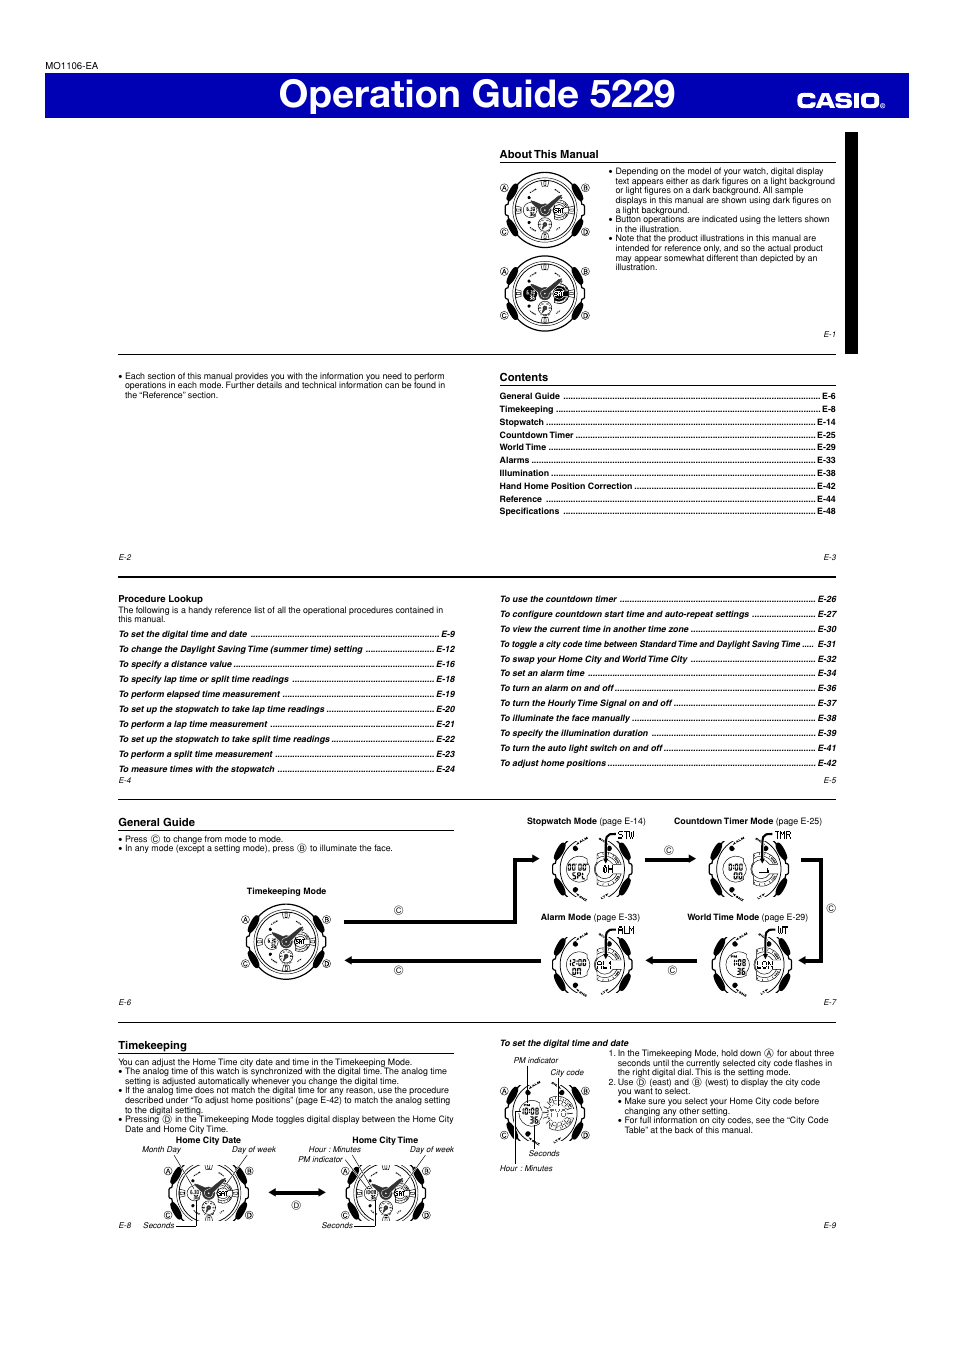 G-Shock GA-120 User Manual | 6 pages | Also for: GA-200, GA-201, 5229